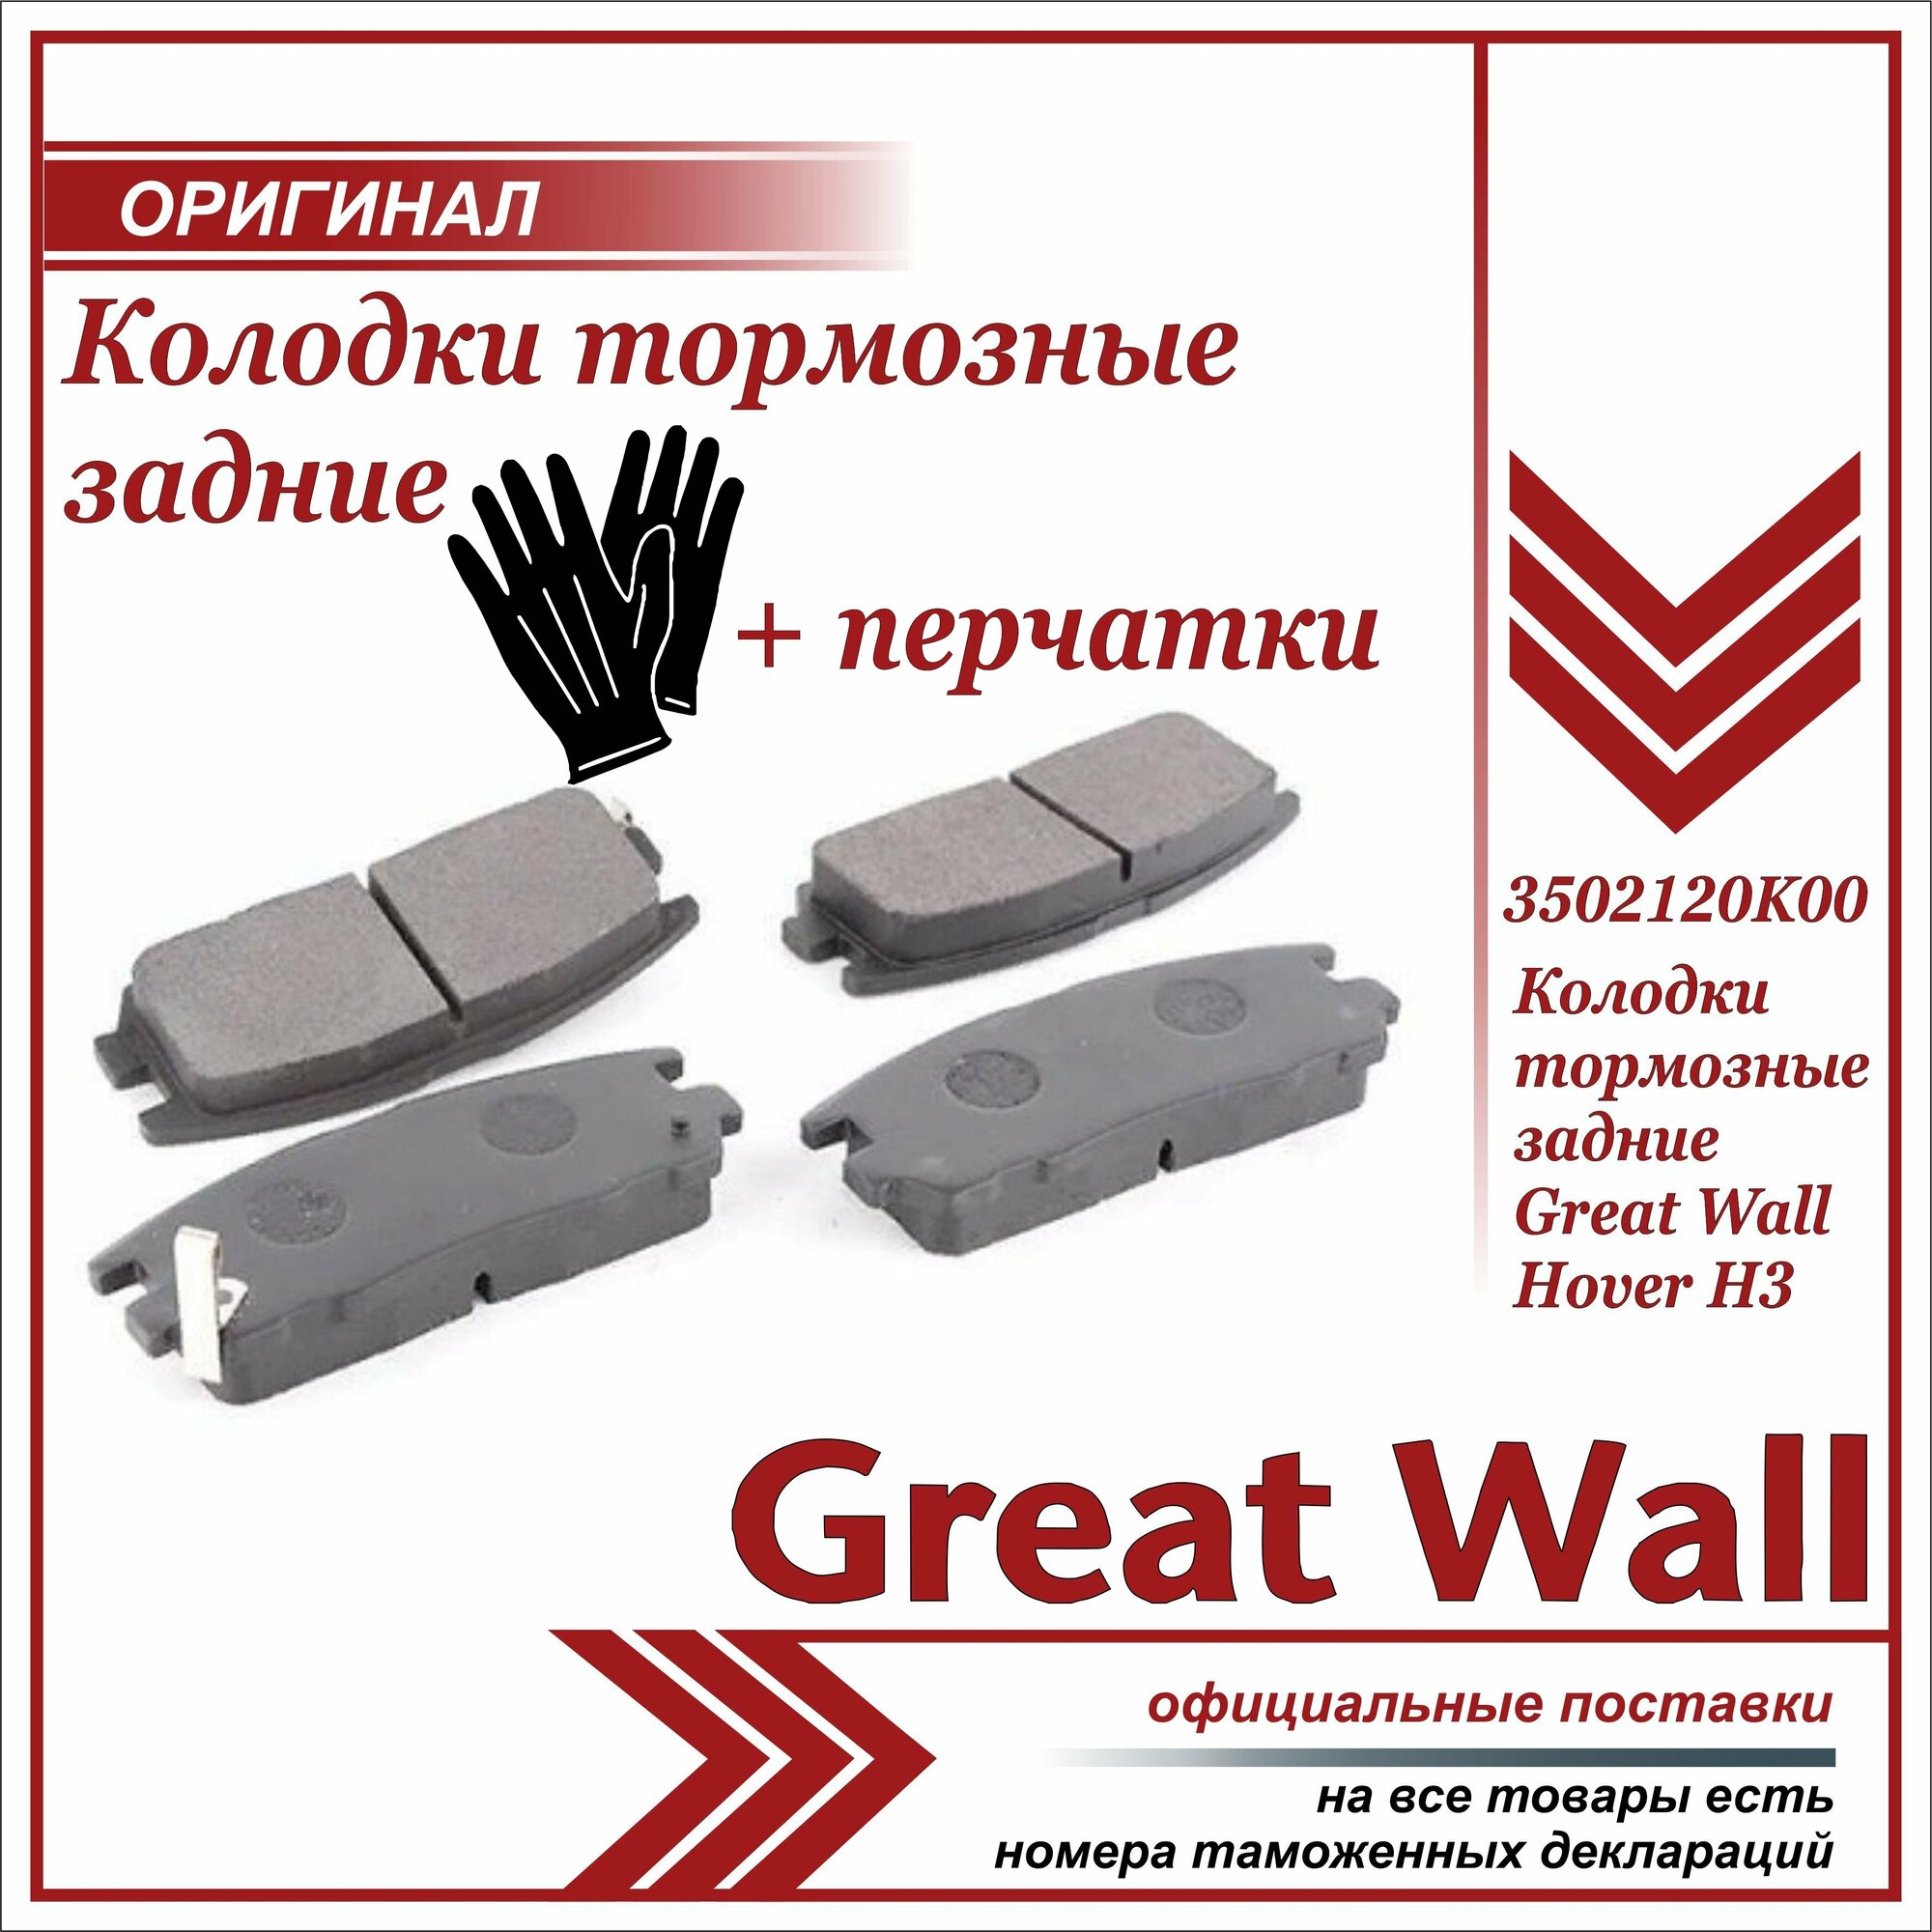 Колодки тормозные задние Грейт Вул Ховер Н3, Great Wall Hover H3 комплект 4 штуки + пара перчаток